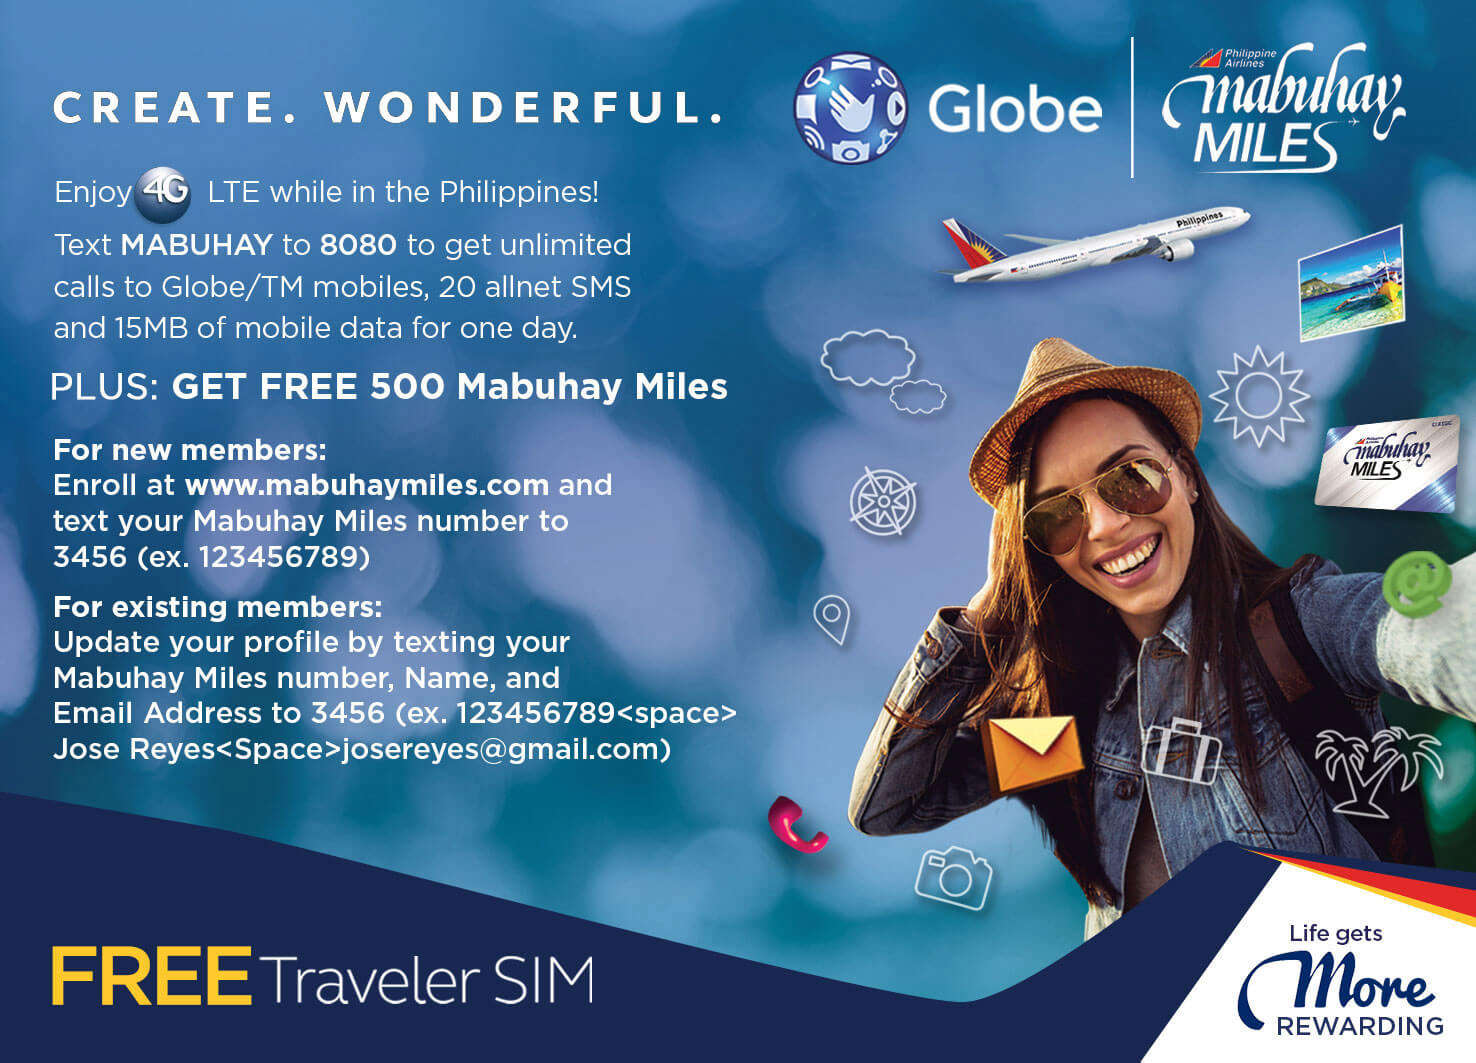 Globe and Mabuhay Miles give free SIMs to PAL passengers